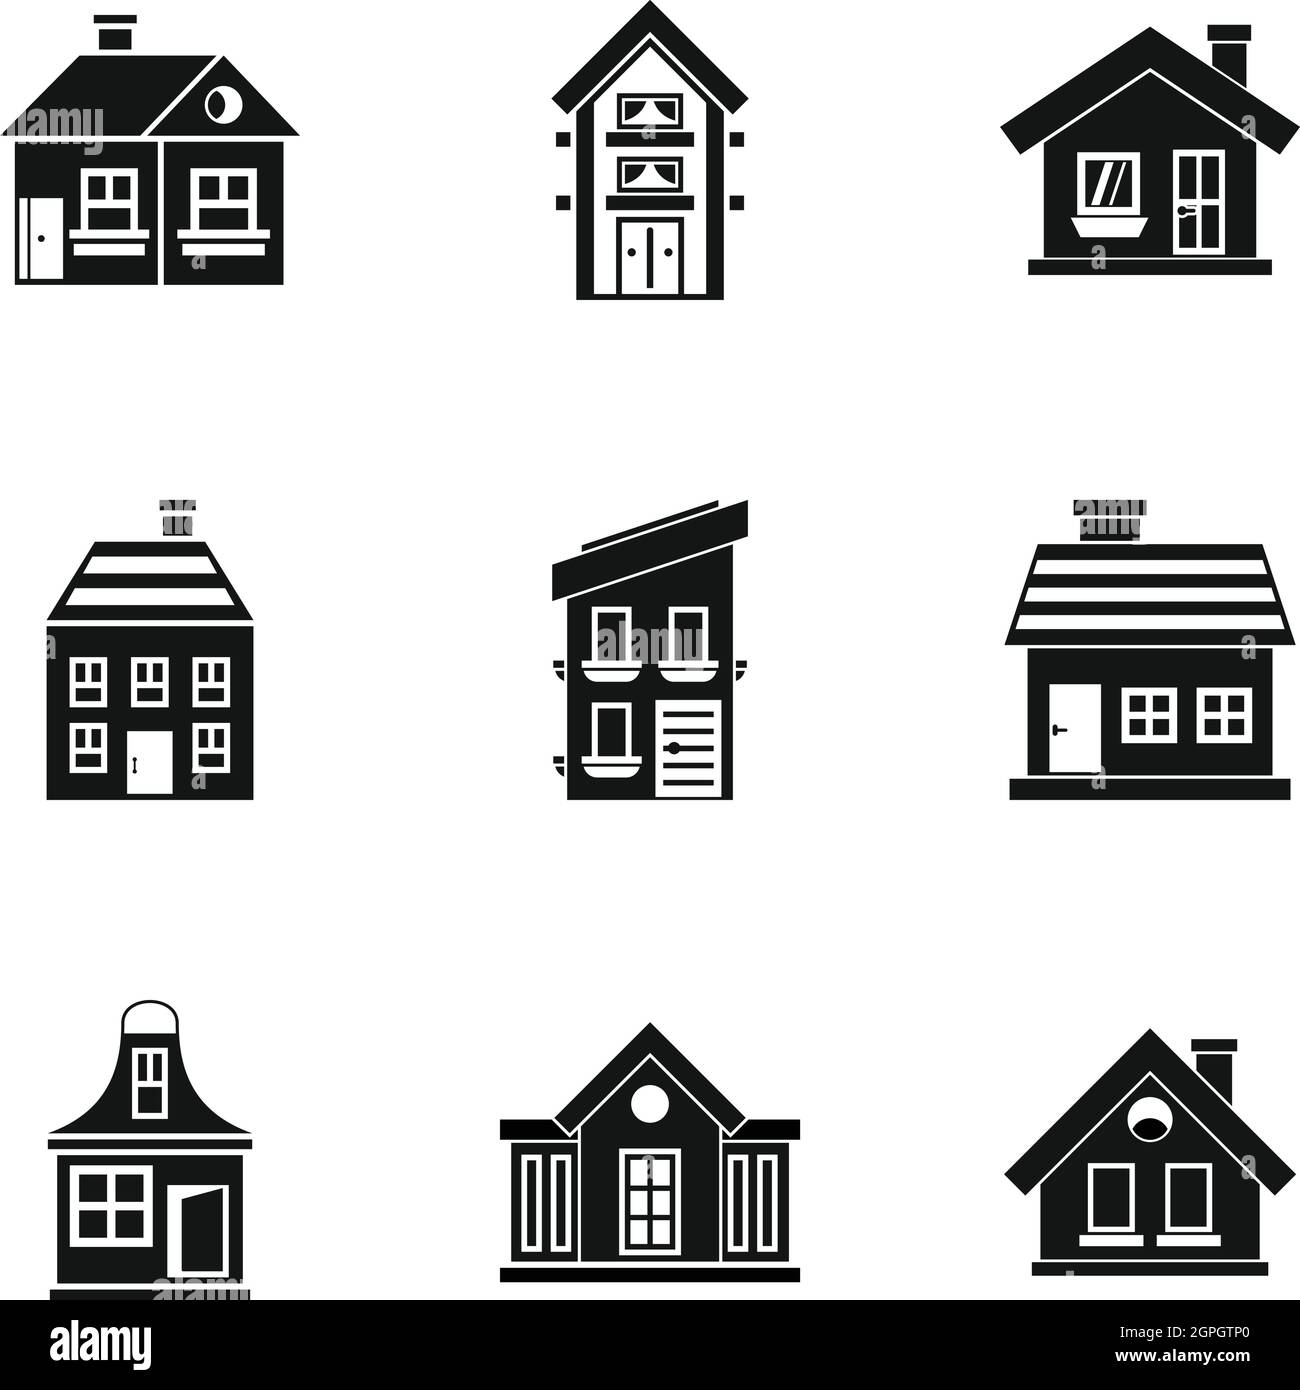 Habitation icons set, simple style Stock Vector